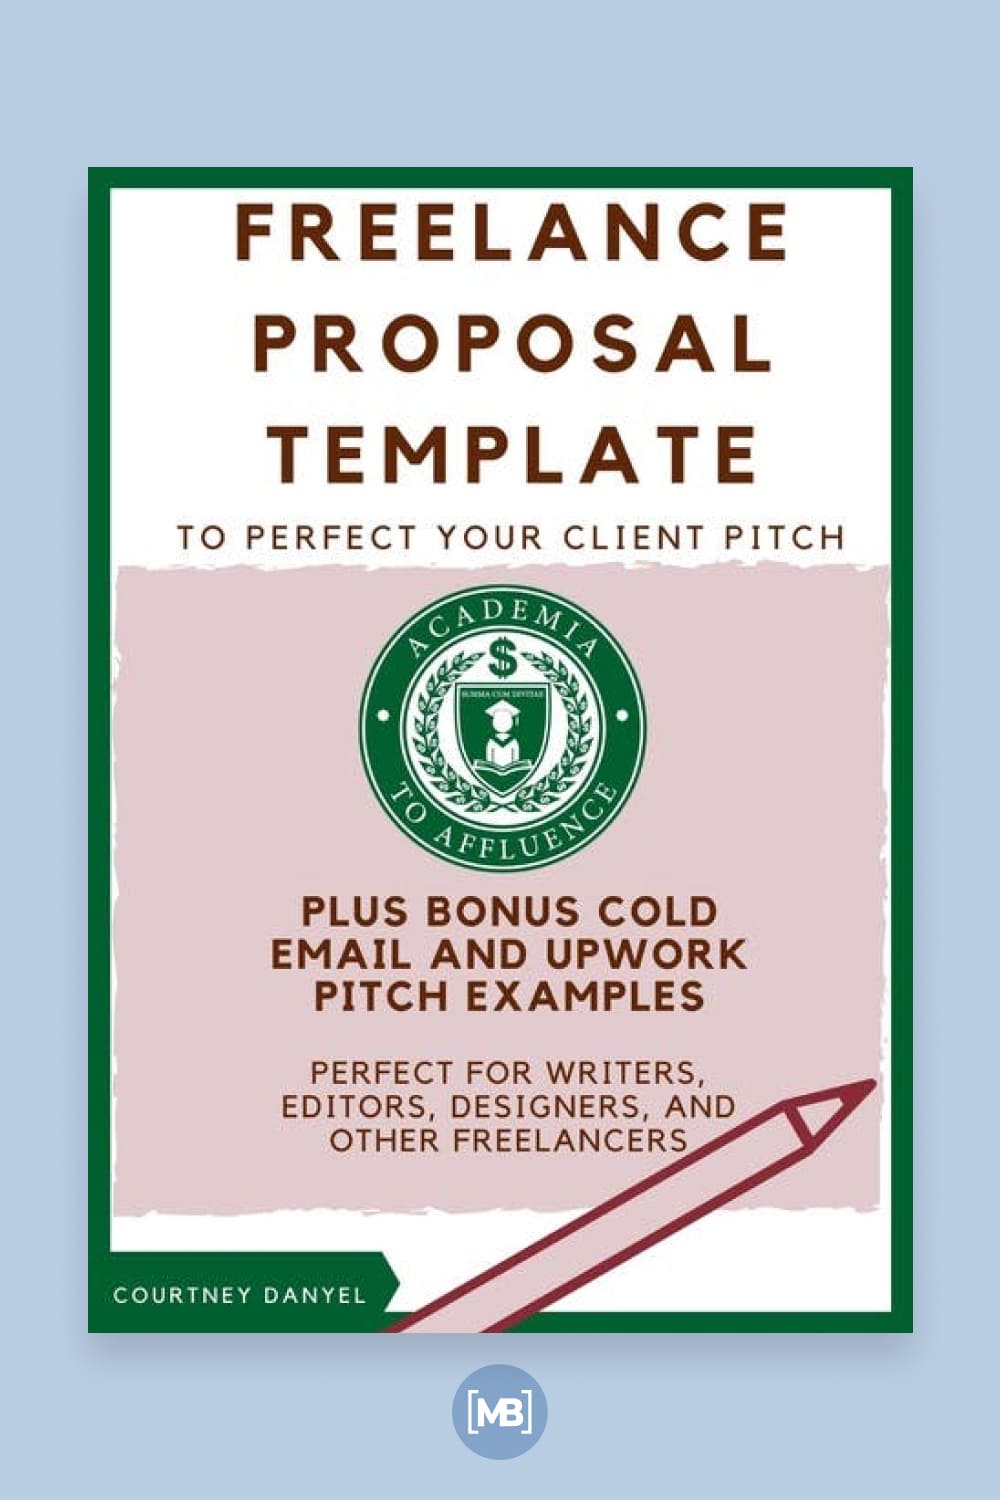 Freelance proposal template.